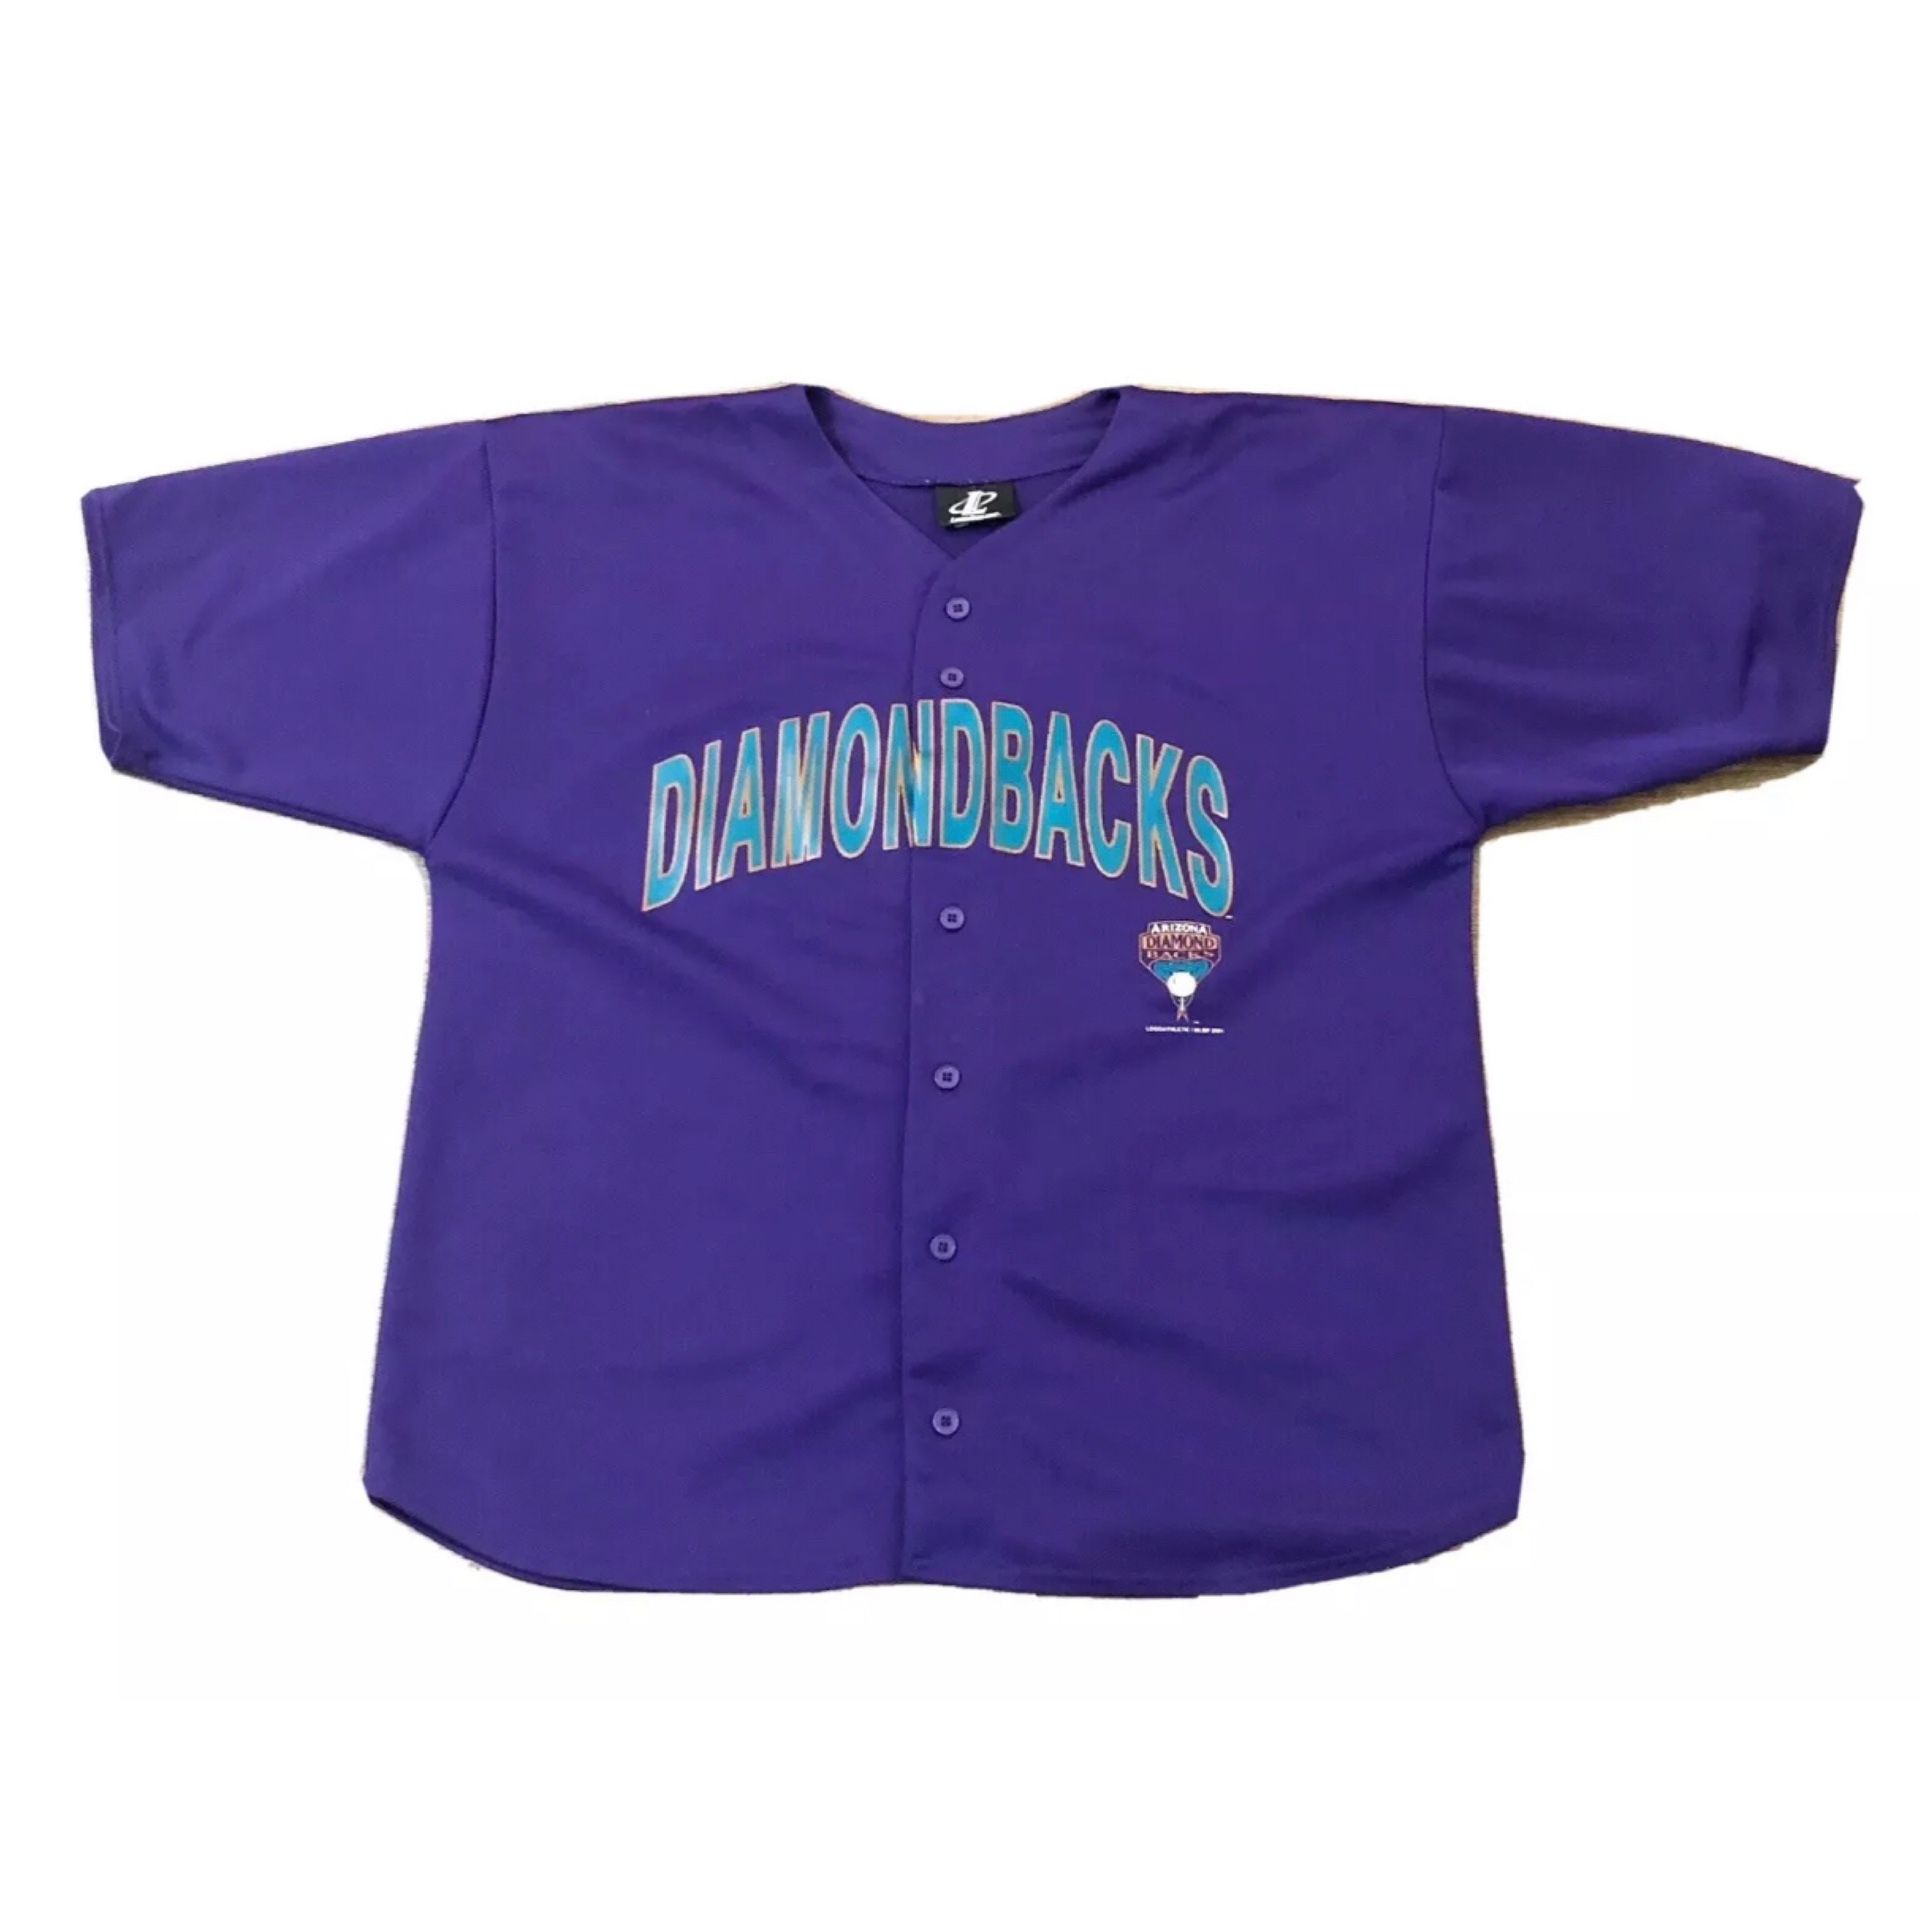 Vintage Arizona Diamondbacks 2001 Purple Jersey Size XL for Sale in Tempe,  AZ - OfferUp